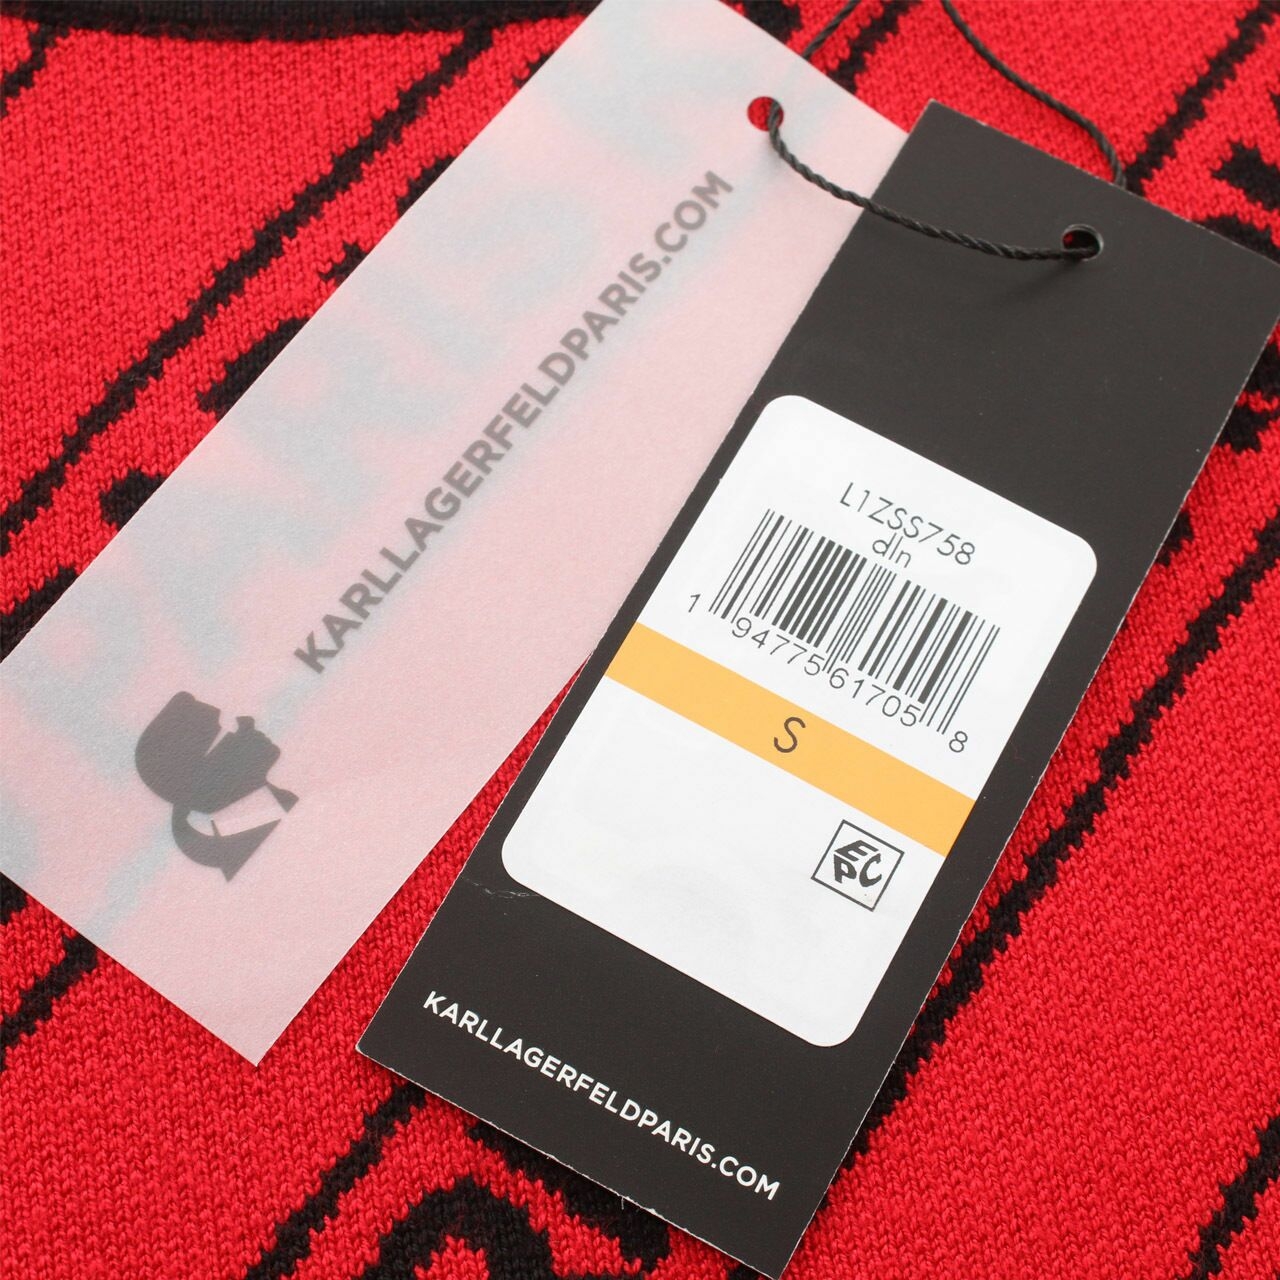 Karl Lagerfeld Paris Logo Red Crewneck Sweater 